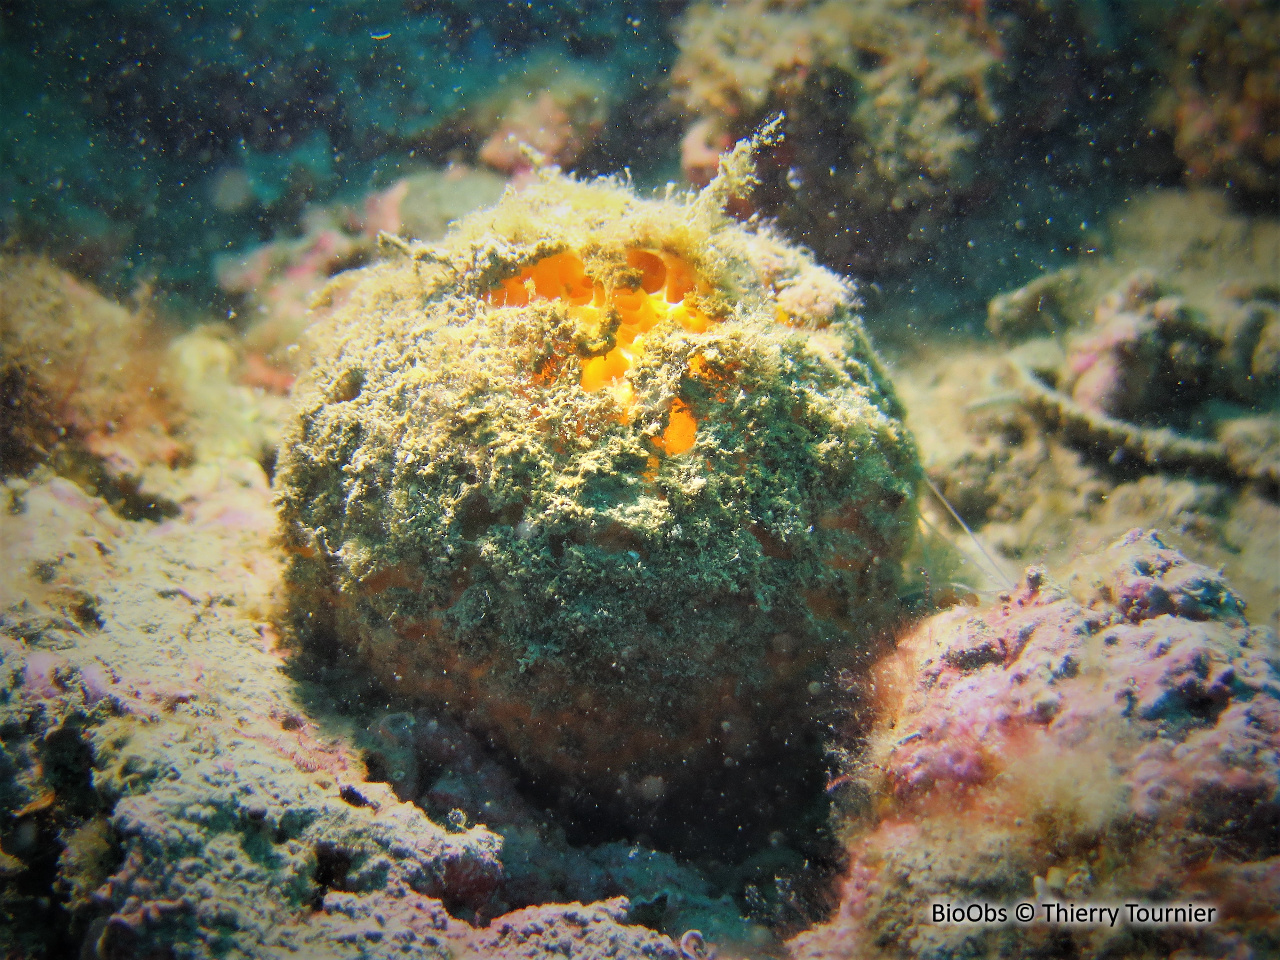 Orange de mer de Méditerranée - Tethya aurantium - Thierry Tournier - BioObs